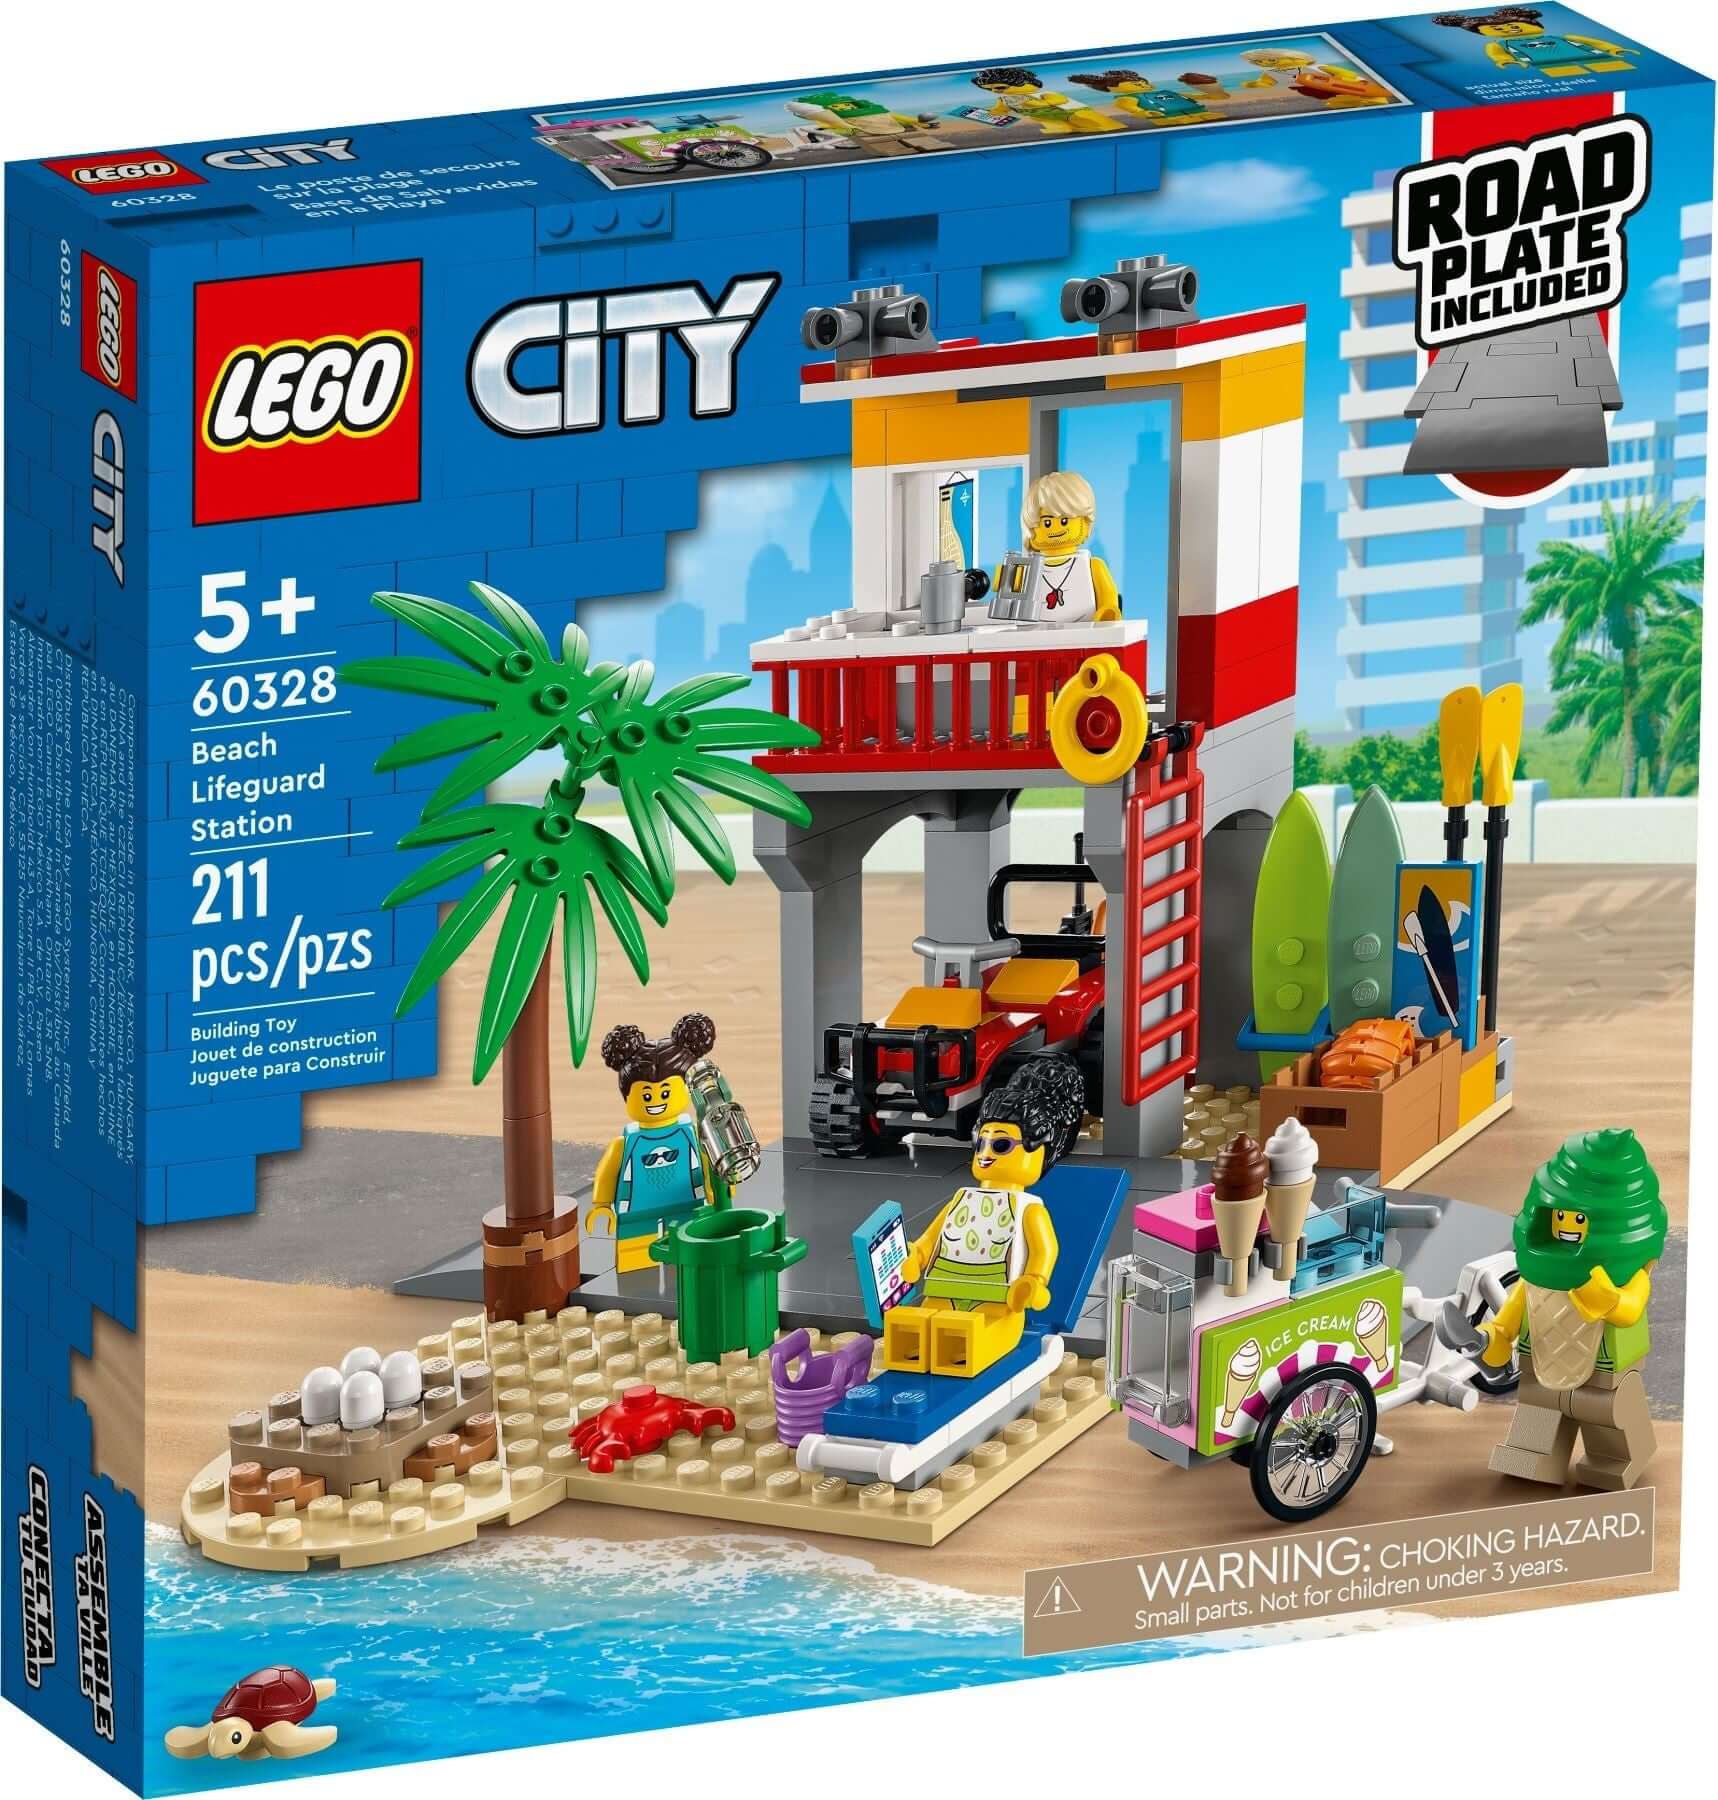 Ære Satire inerti LEGO City 60328 Beach Lifeguard Station | Brickollector NZ